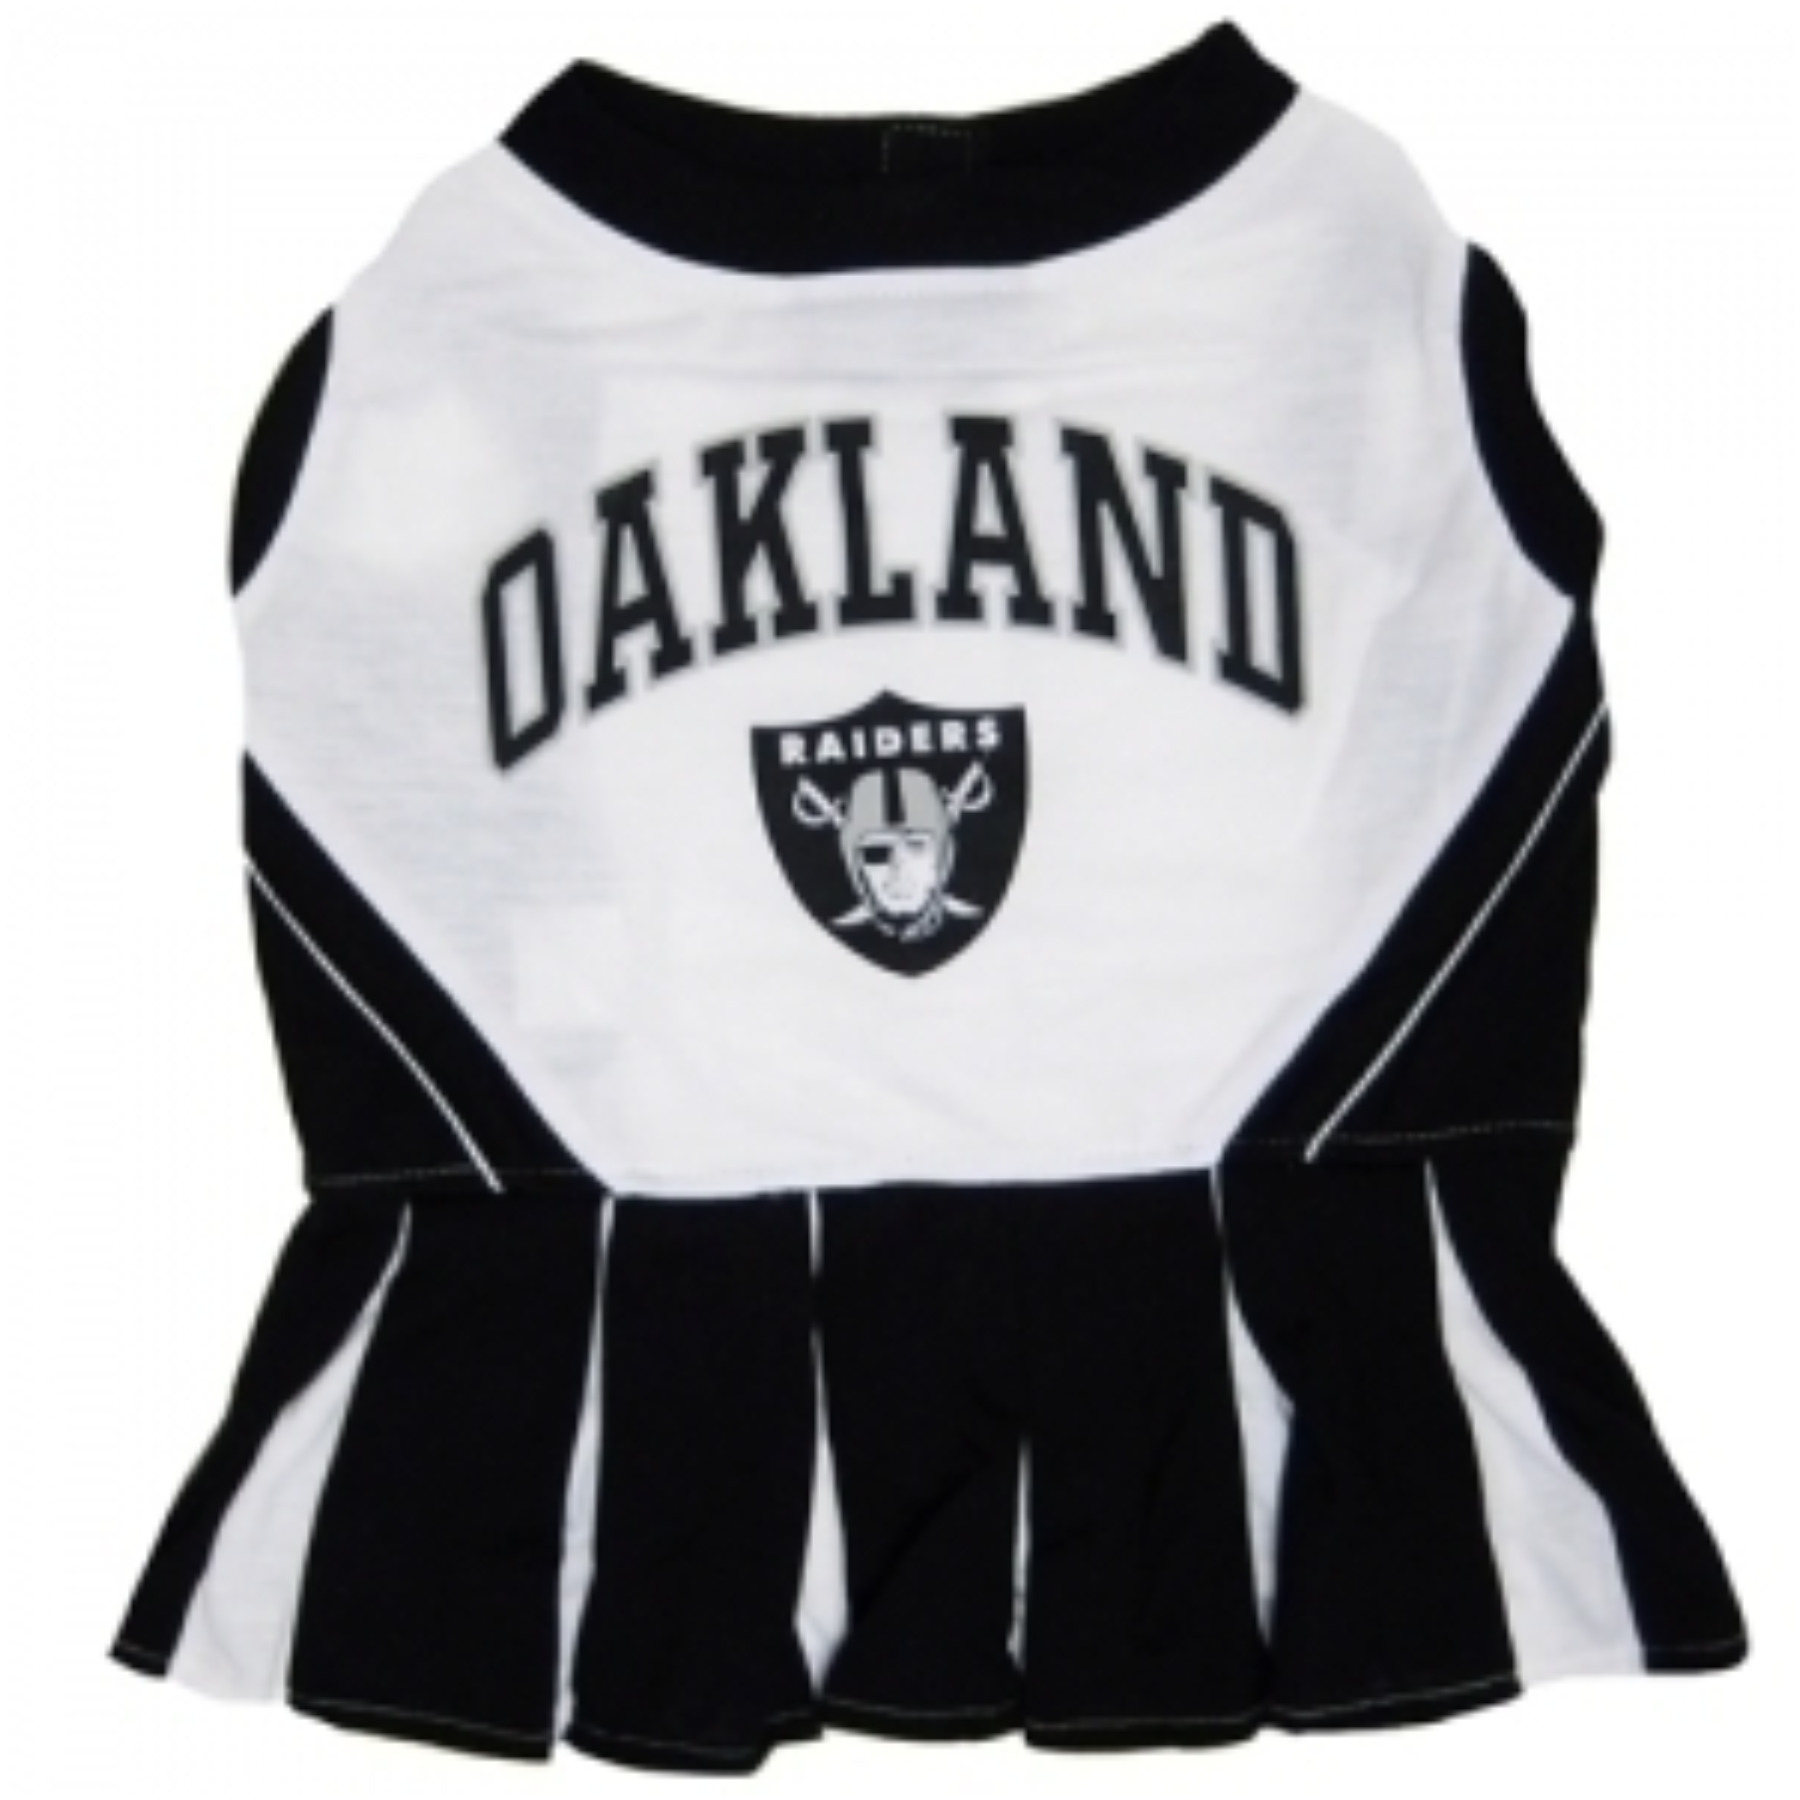 Oakland Raiders Cheerleader Dog Dress